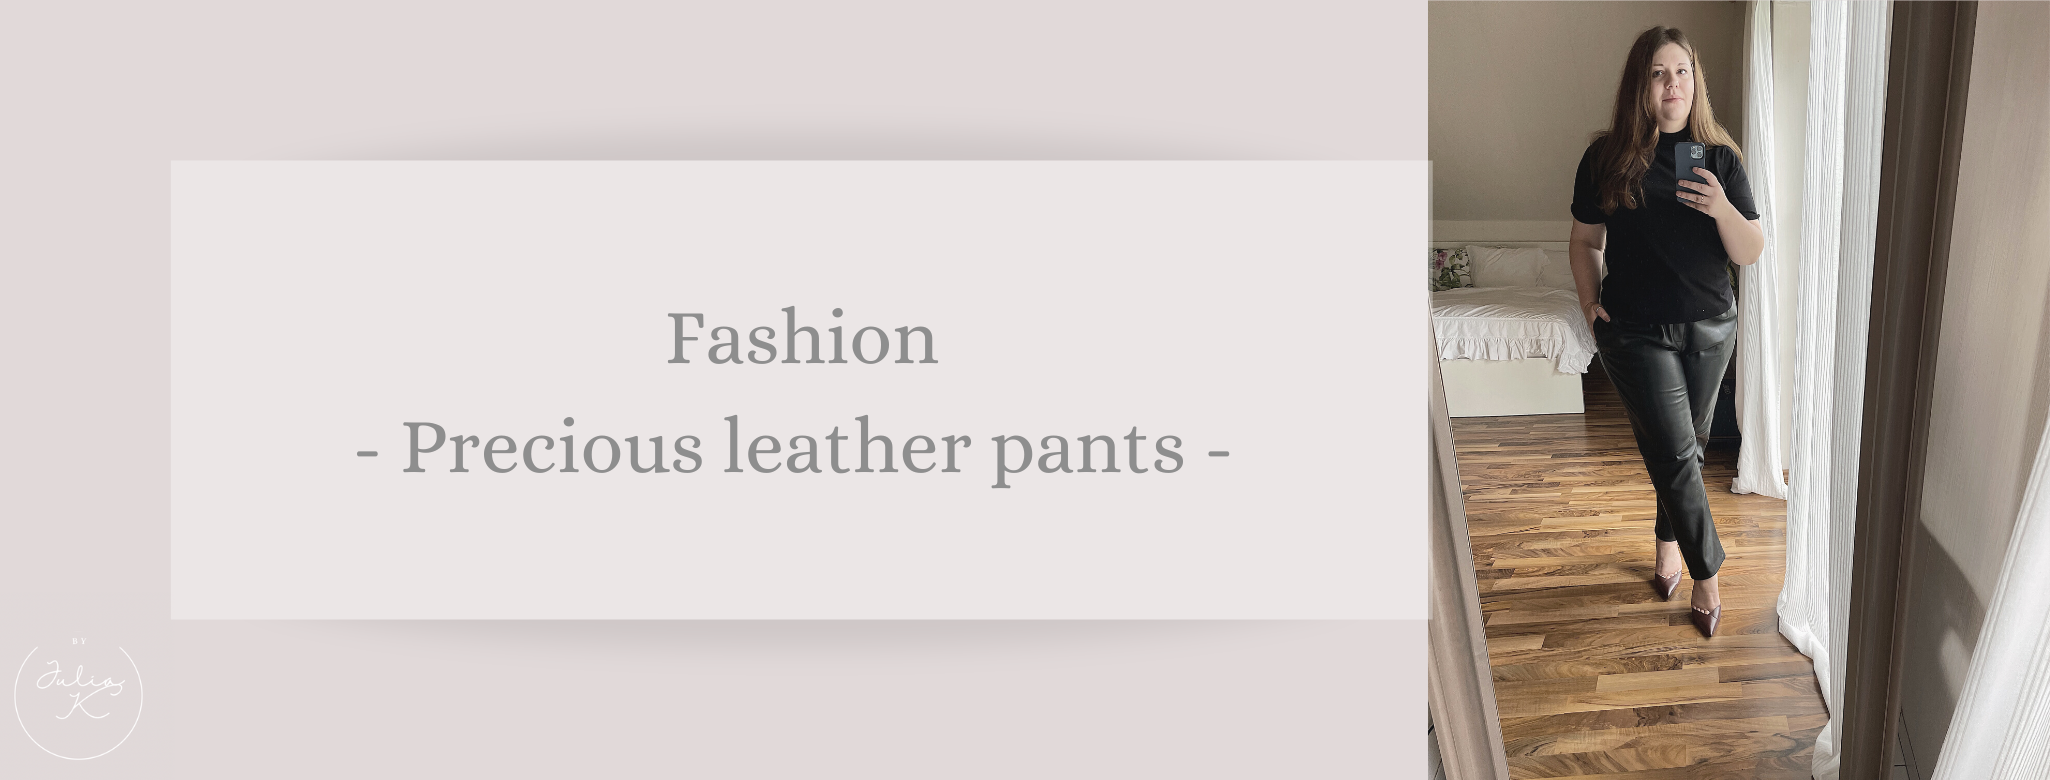 Fashion: Precious leather pants